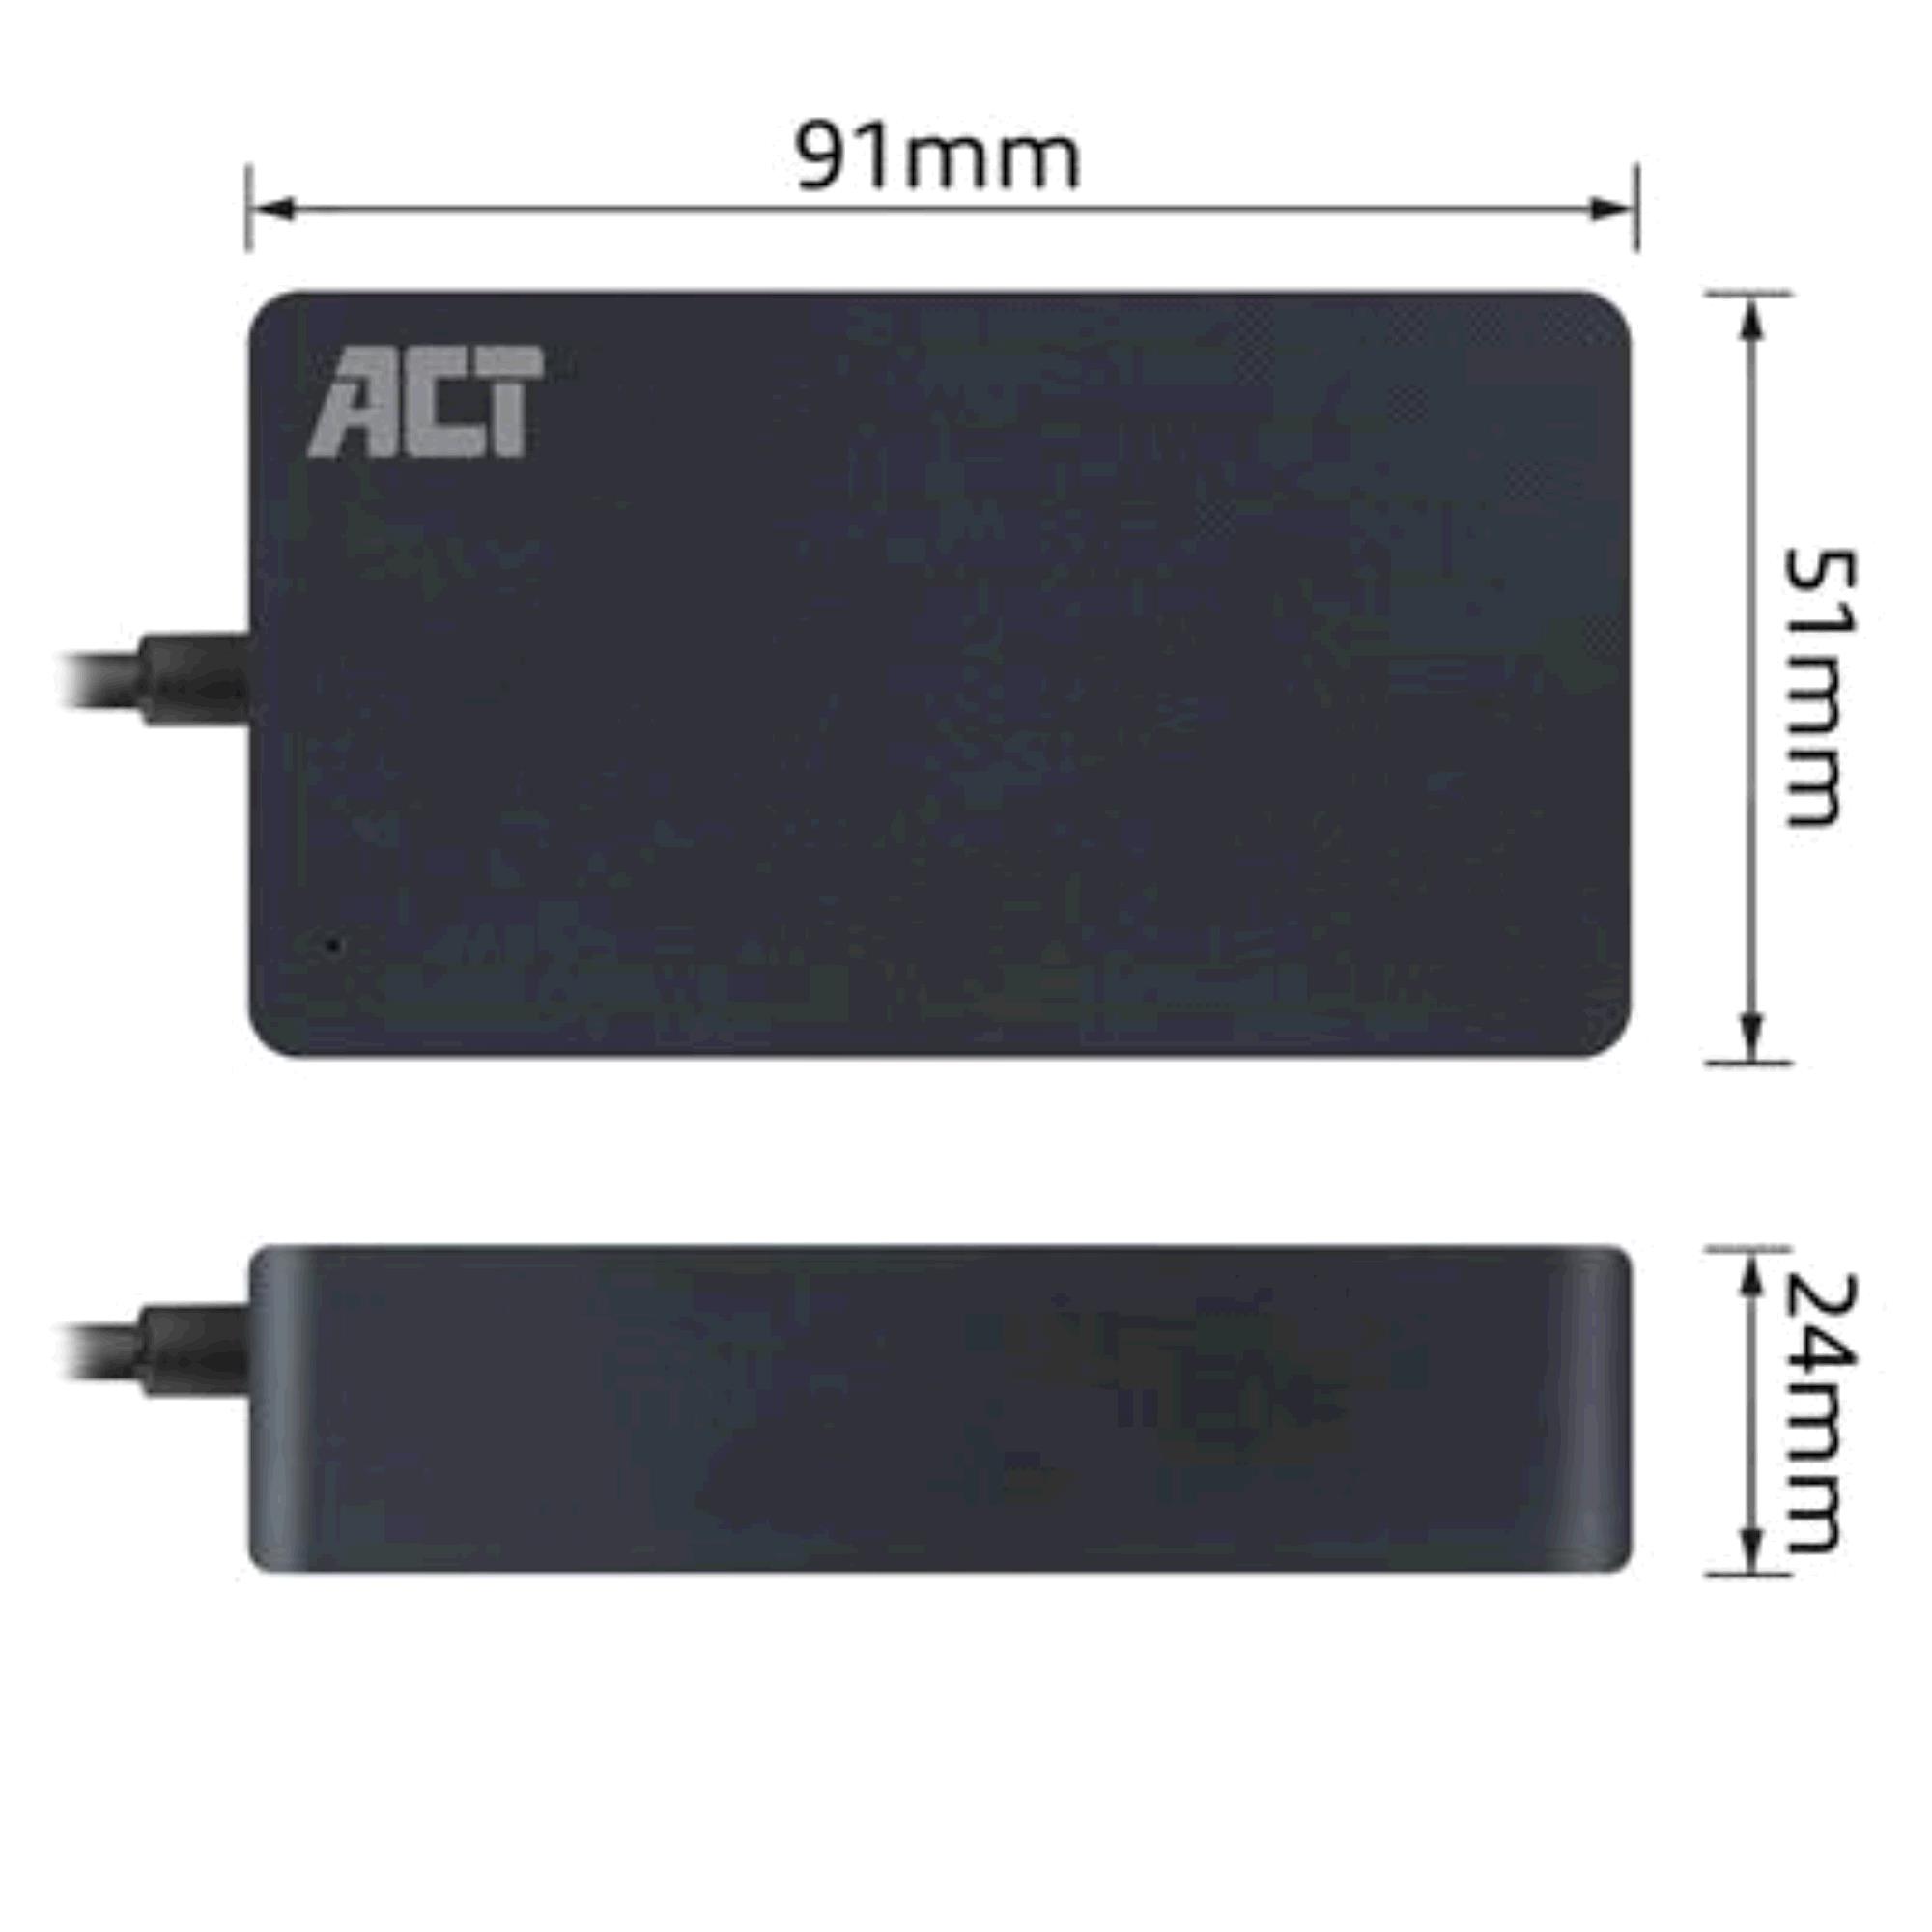 ACT AC2000 | USB-C | 45W